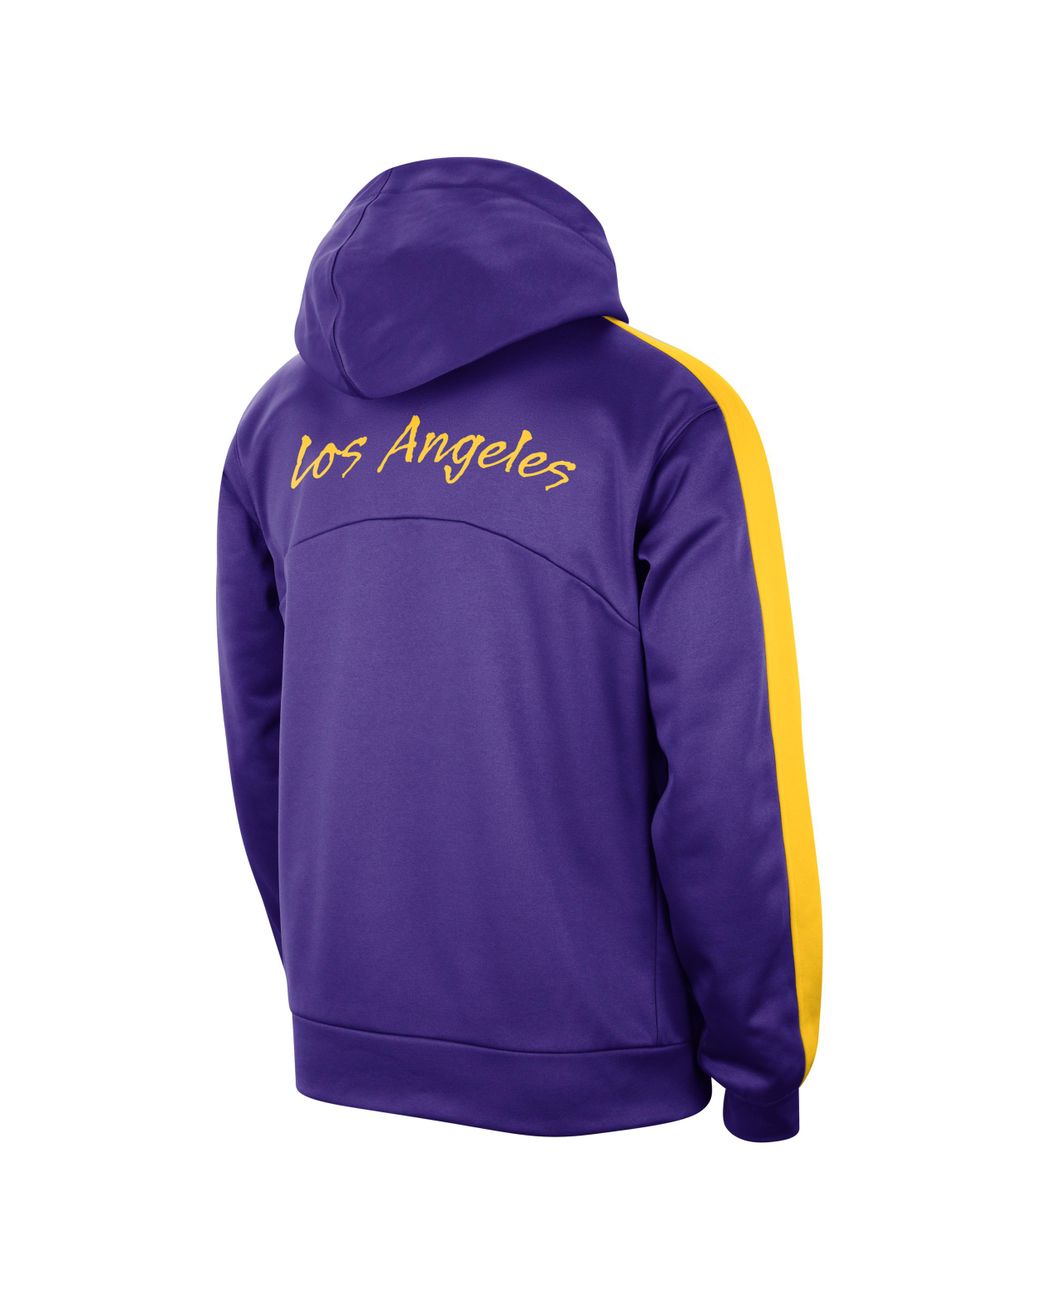 Los Angeles Lakers Spotlight Men's Nike Dri-FIT NBA Pullover Hoodie.